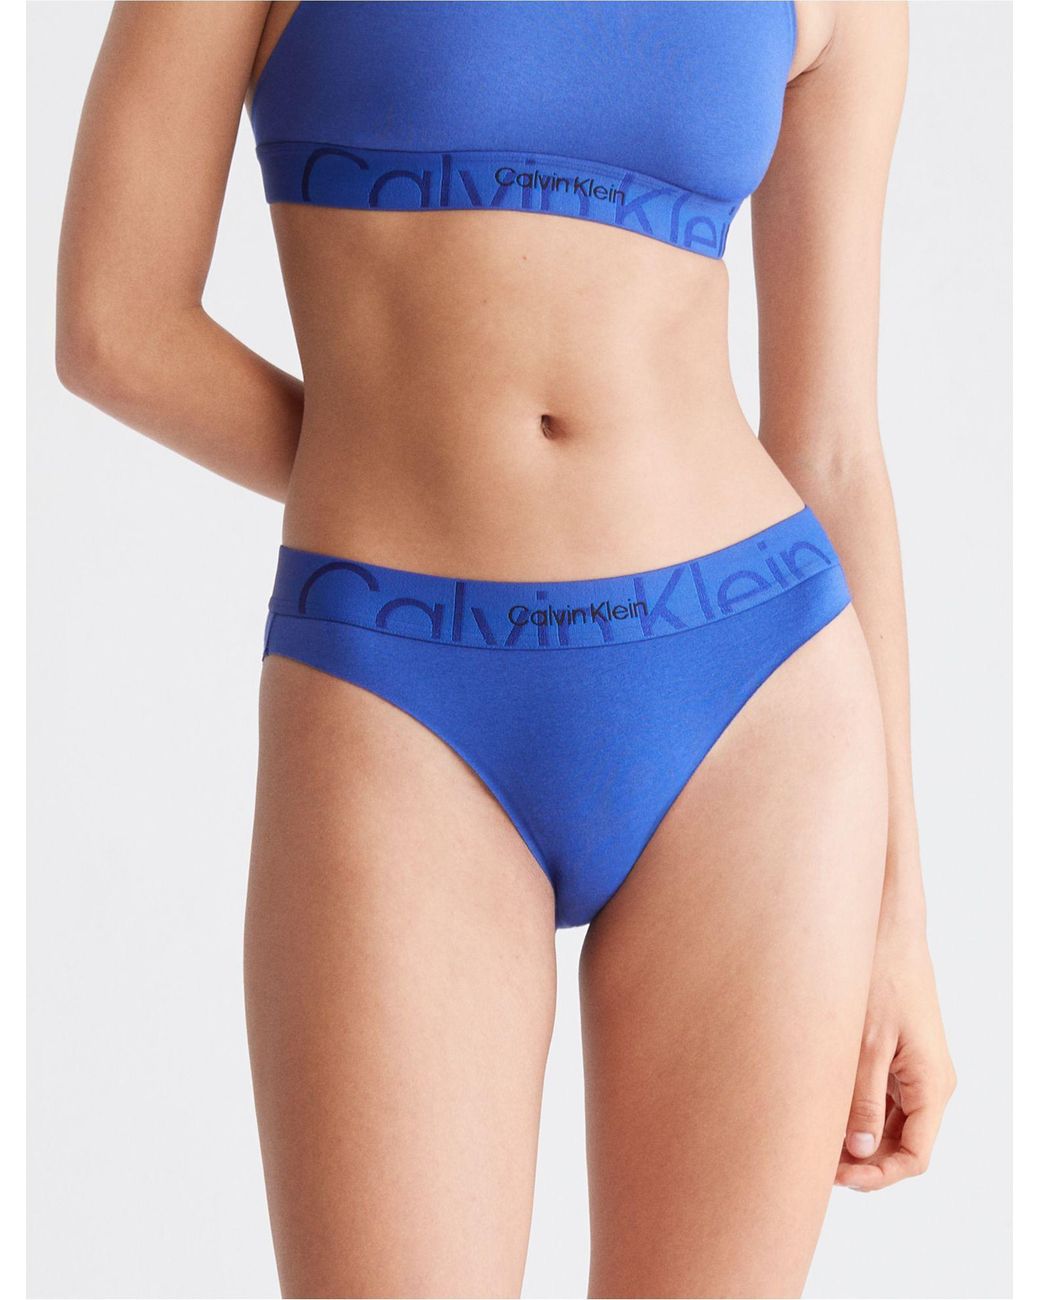 Klein | Calvin Bikini Embossed Blue Icon in Lyst